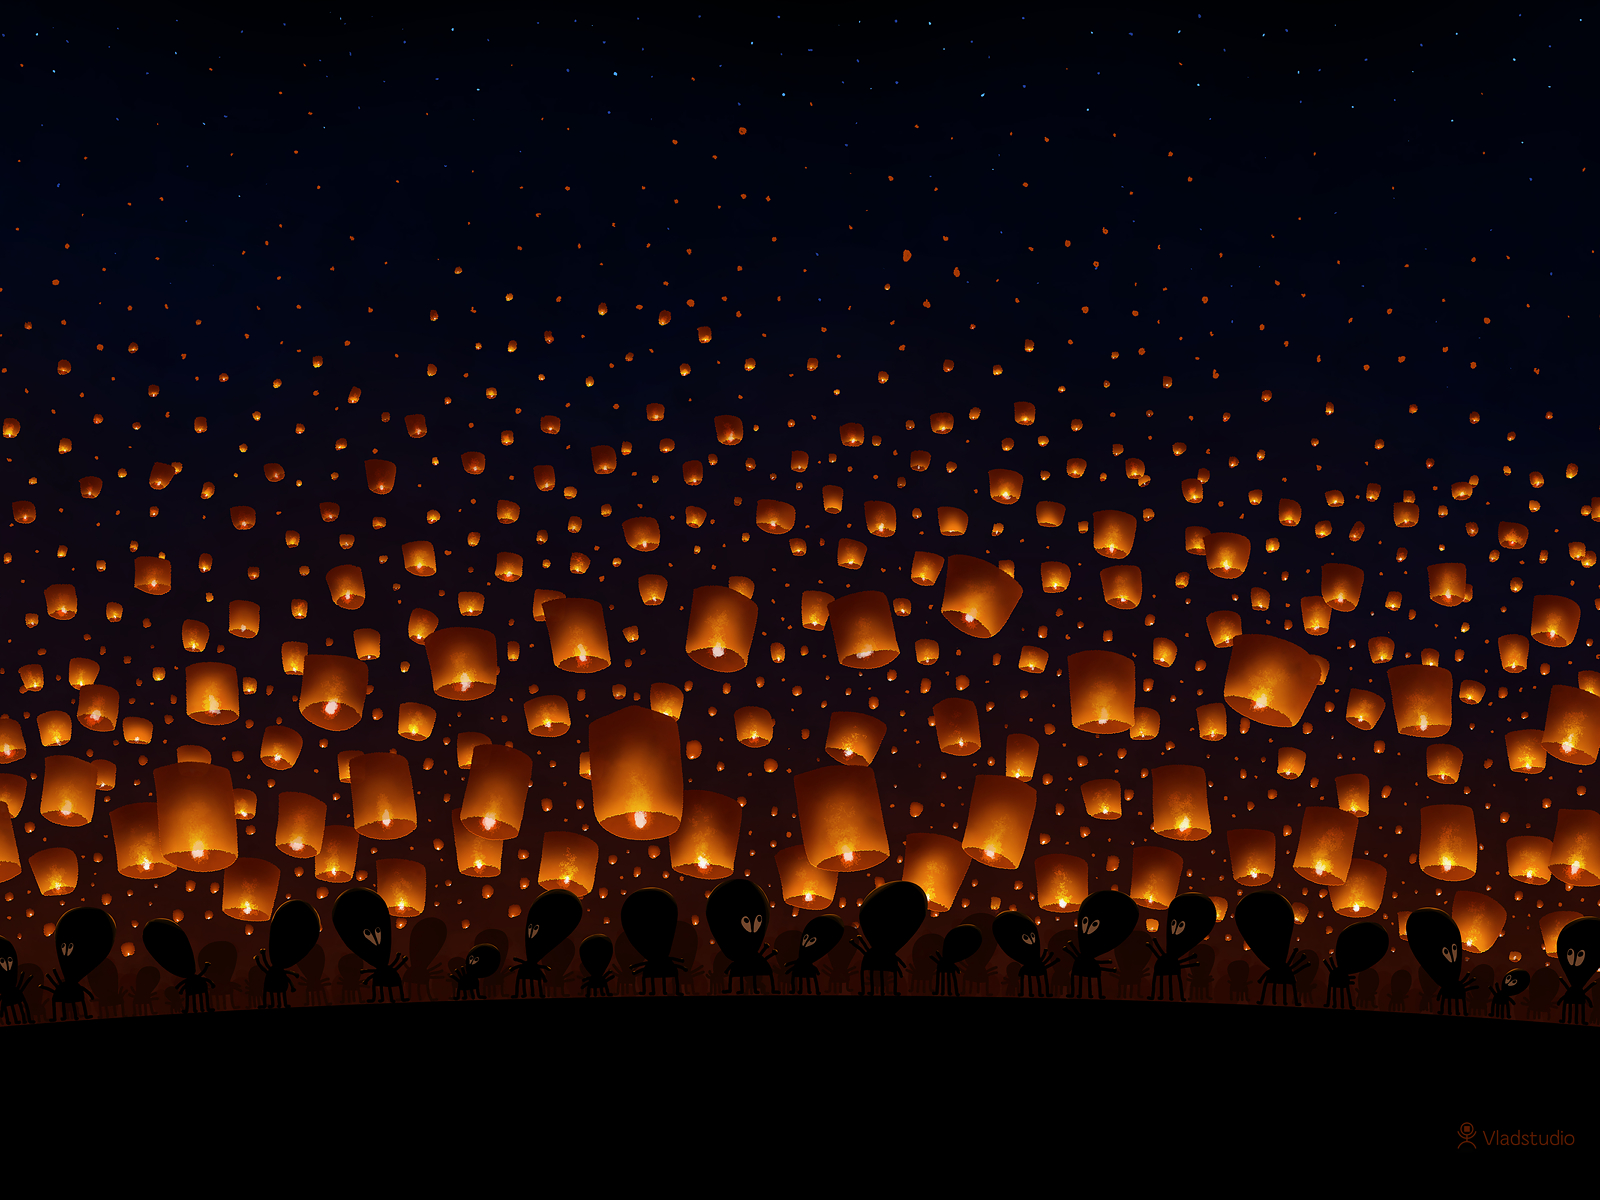 Sky Lanterns By Vladstudio